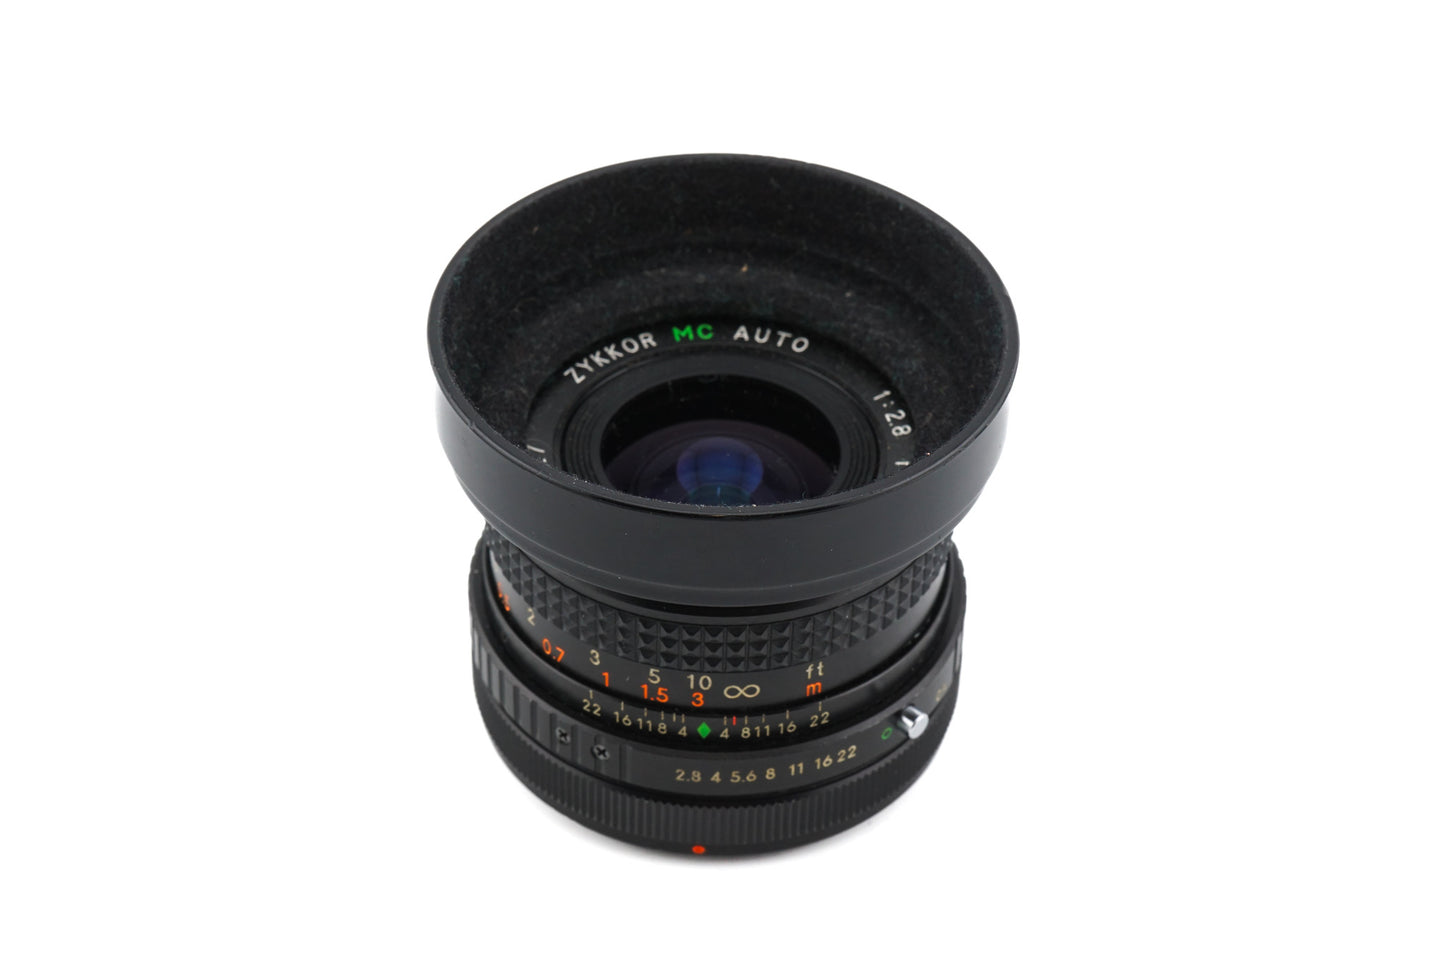 Zykkor 28mm f2.8 MC Auto - Lens